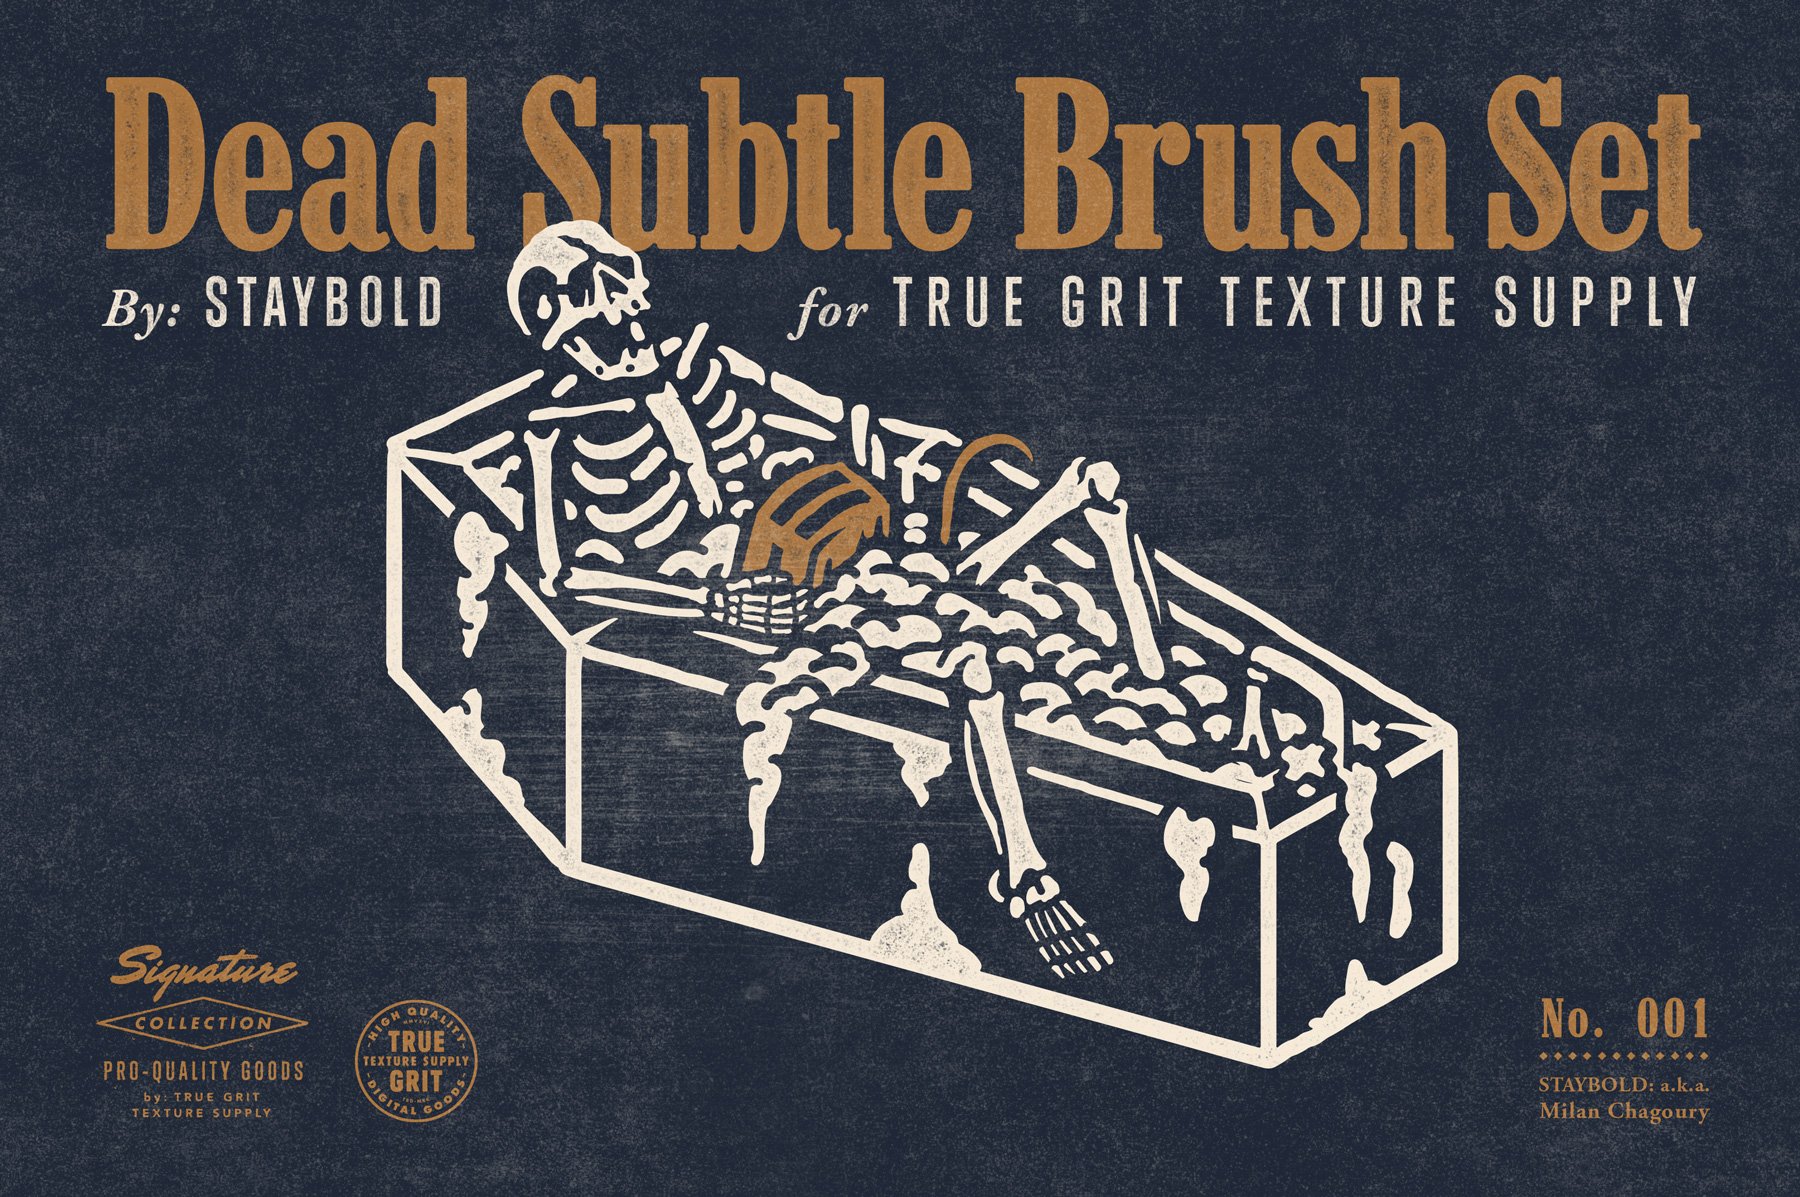 Dead Subtle Brush Setcover image.